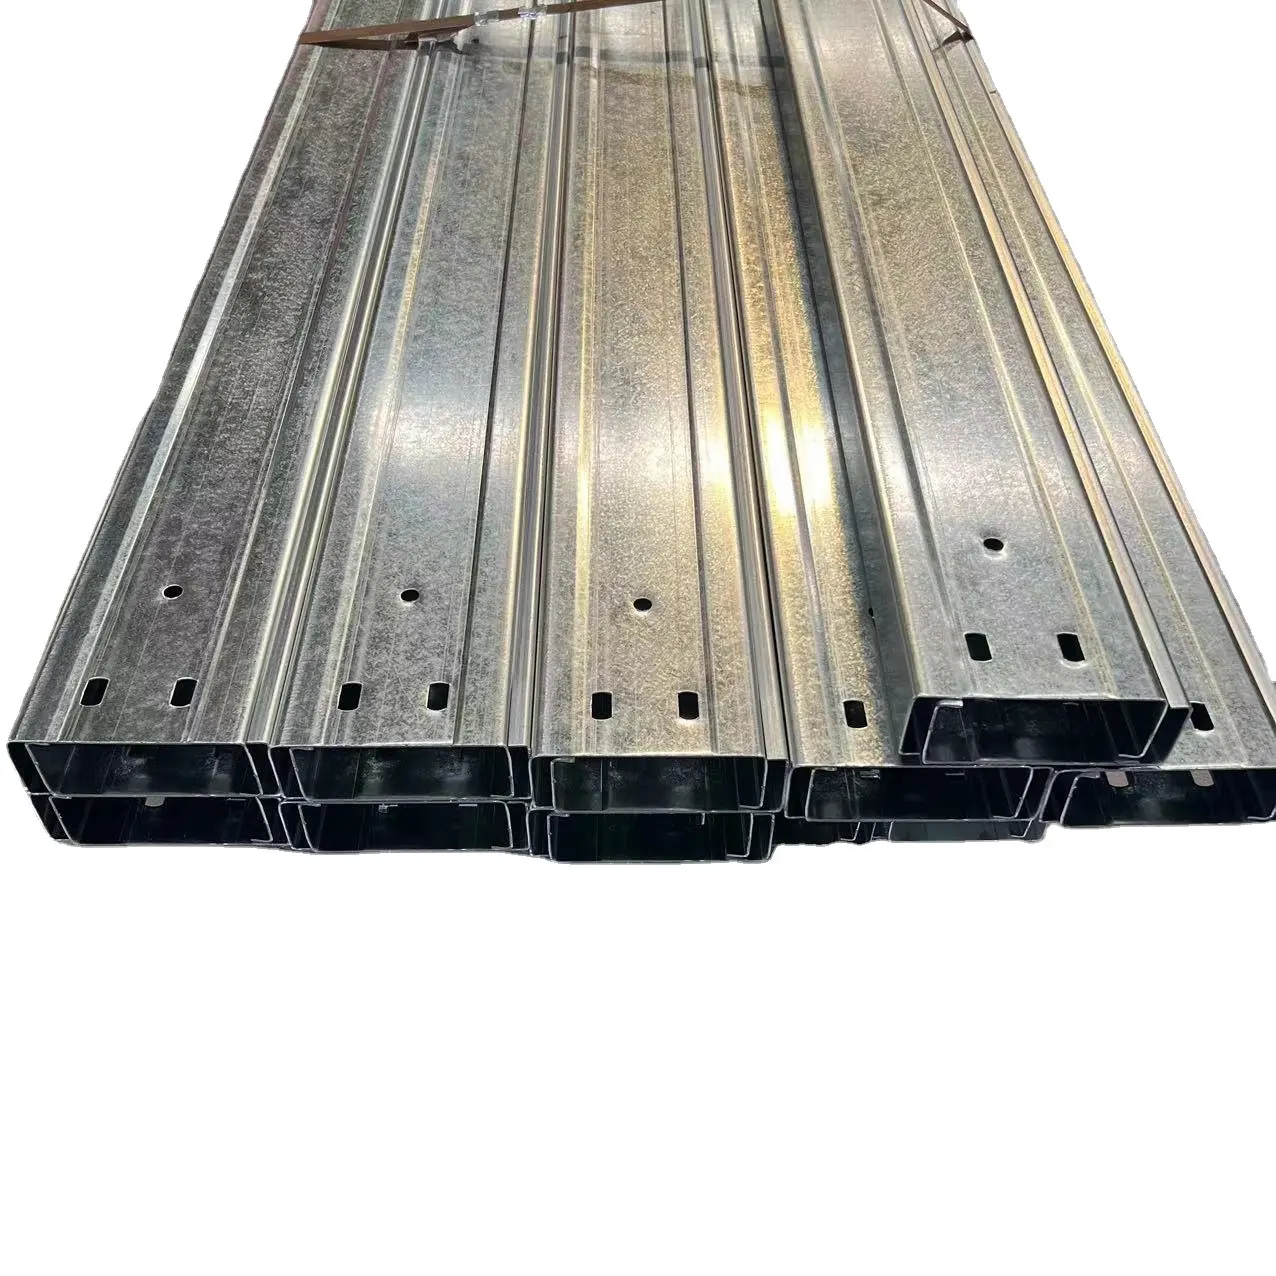 C鋼穴あきチャネル金属建築標準サイズGI亜鉛メッキ鋼C PurlineCチャネル